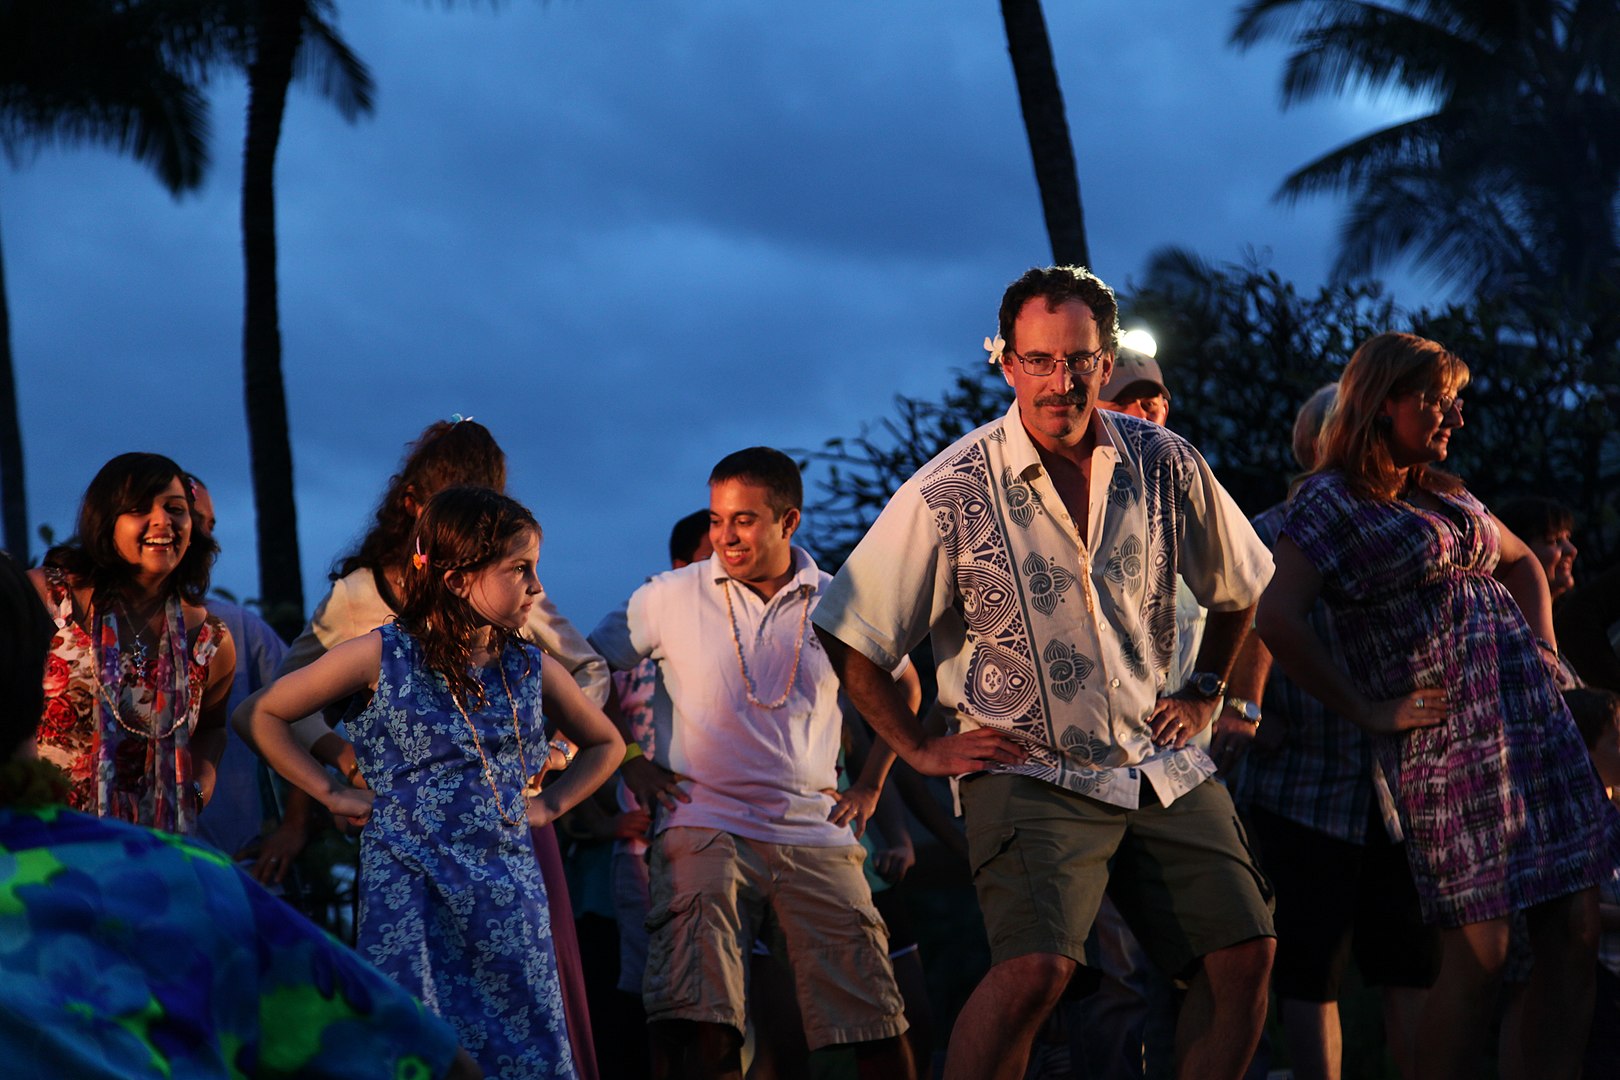 Guests learning how to hula at a Hawaiian Luau.